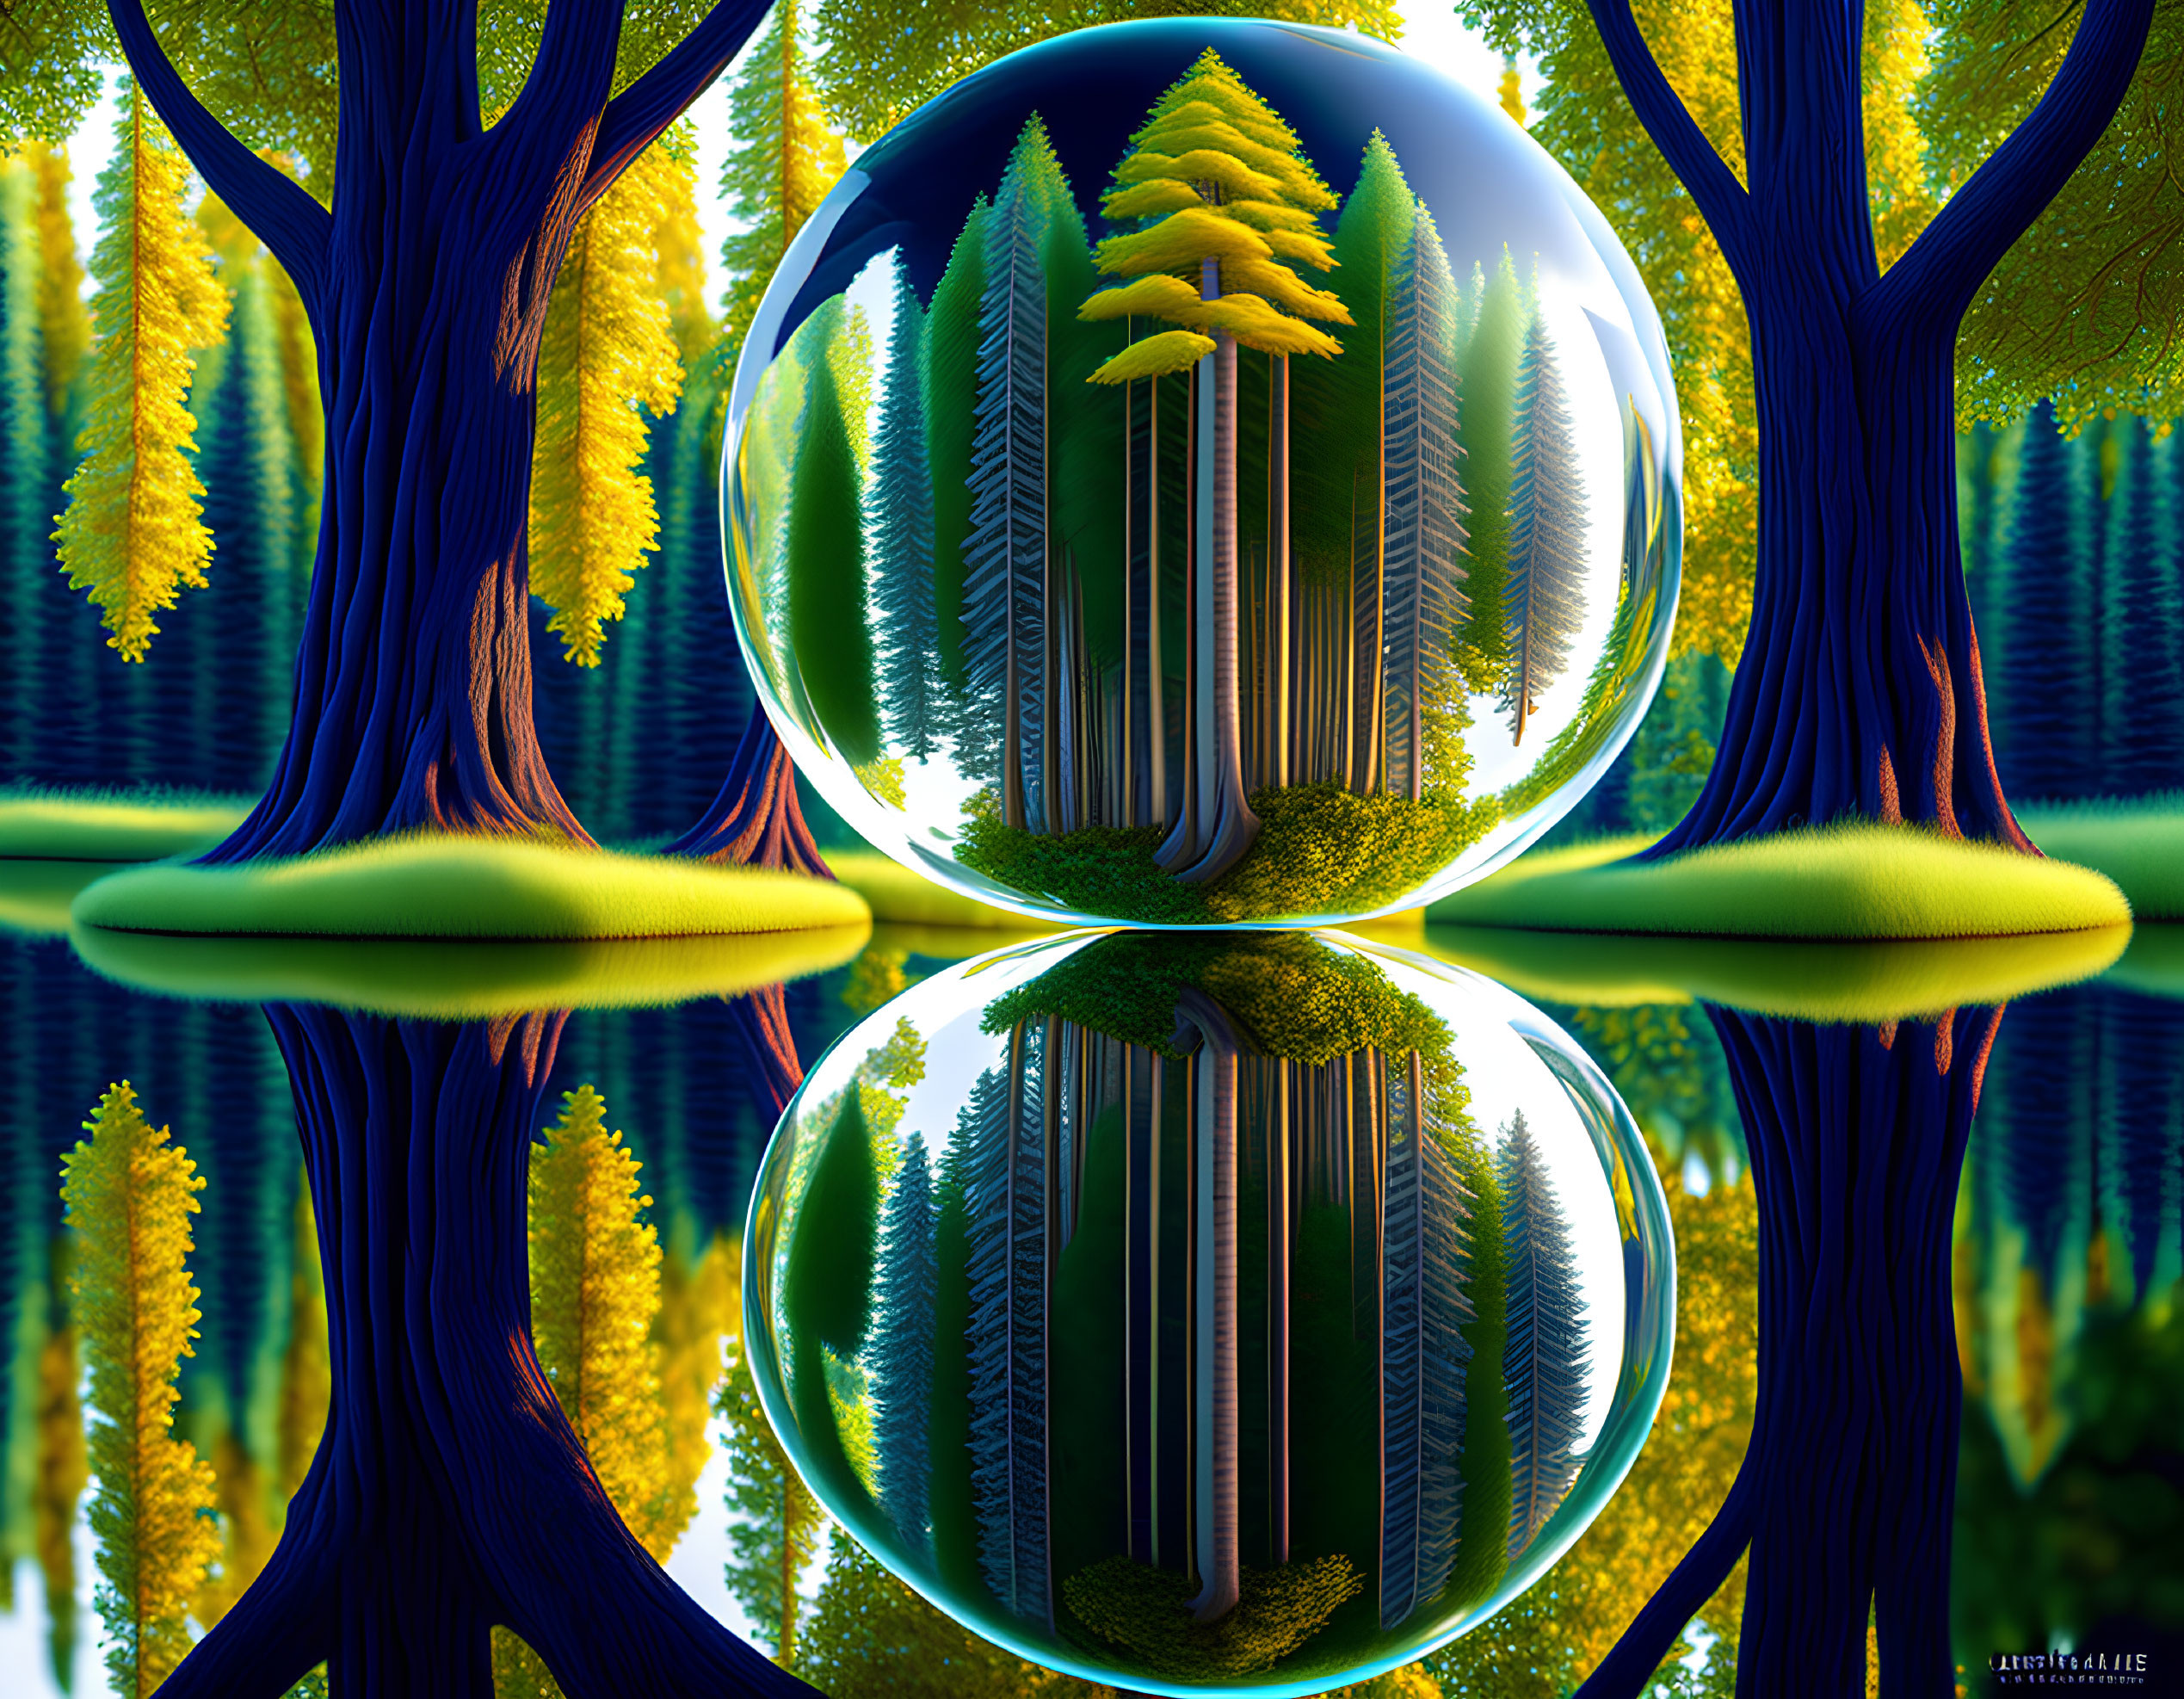 Digital art: Serene forest scene with reflective sphere capturing inverted trees